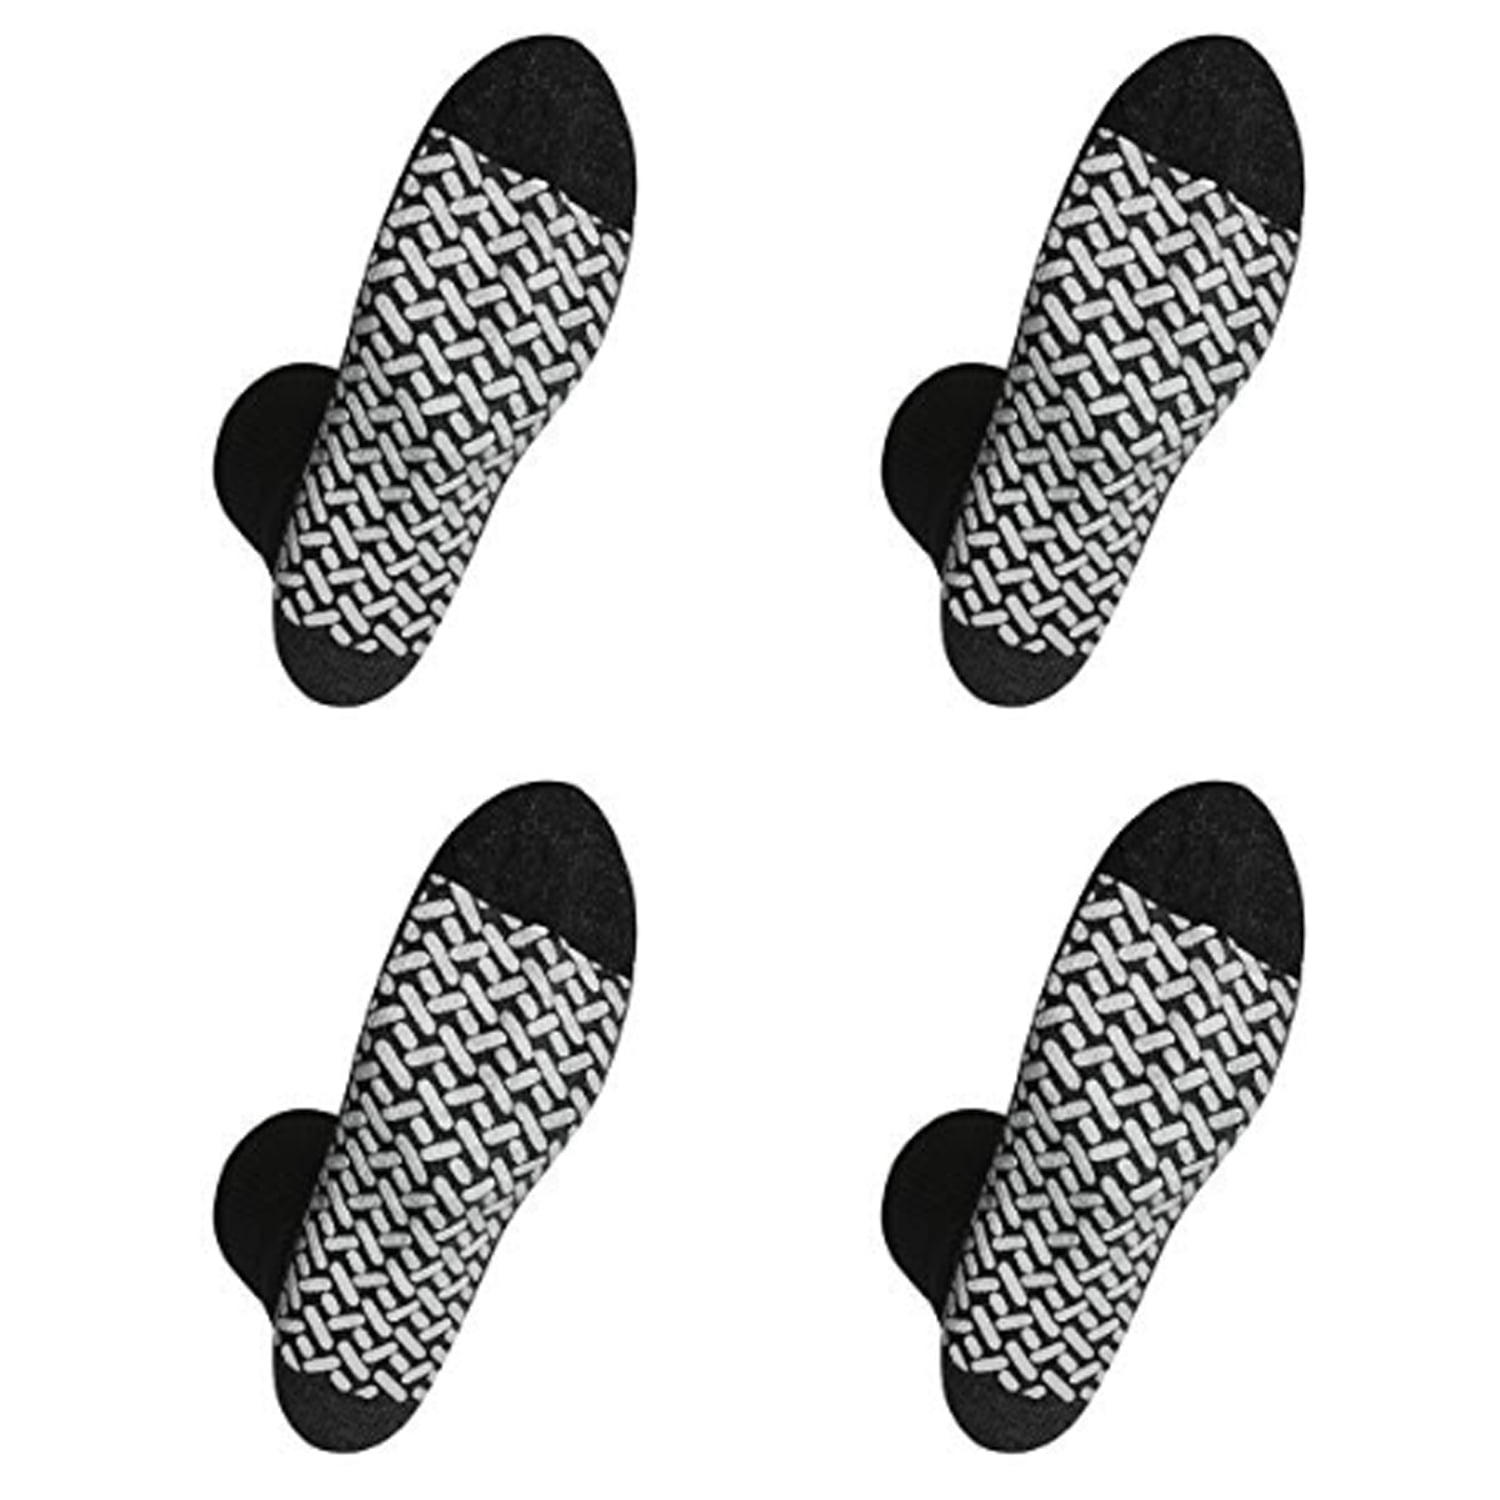 4 Pairs of Nobles Men's Black Comfortable Slipper Socks Size 13-15 ...